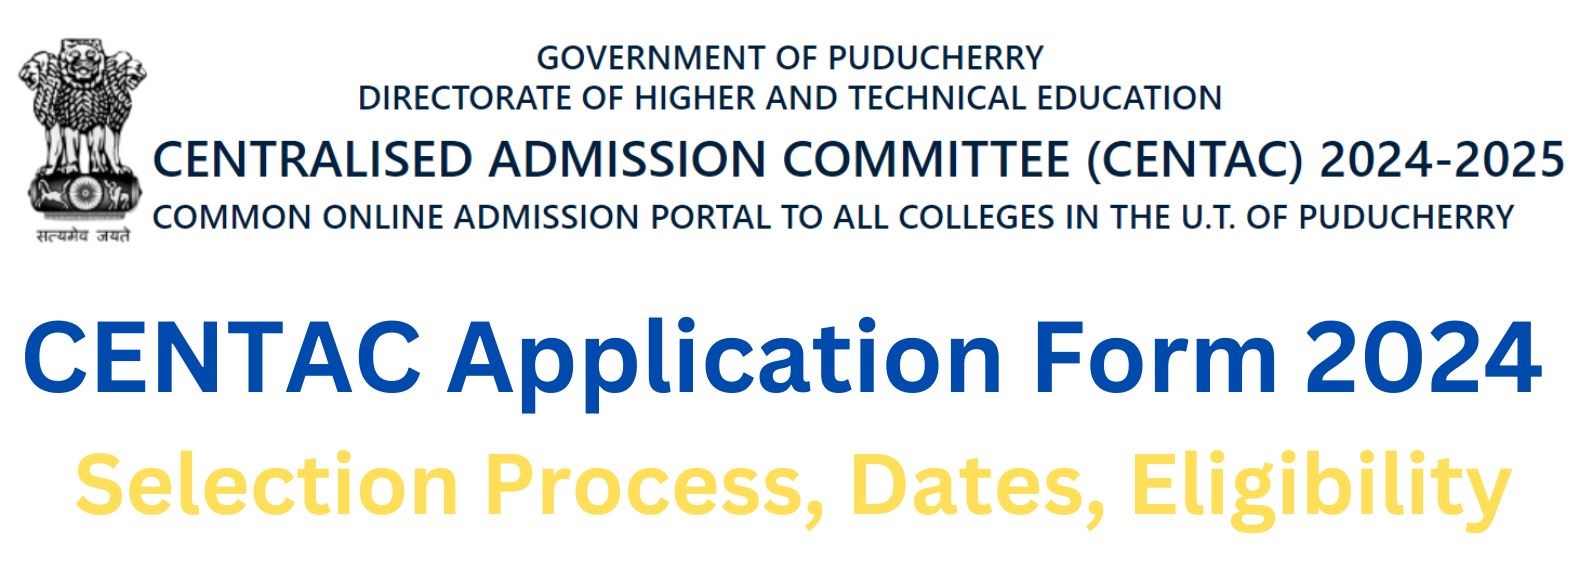 CENTAC Application Form 2024: Selection Process, Dates, Eligibility